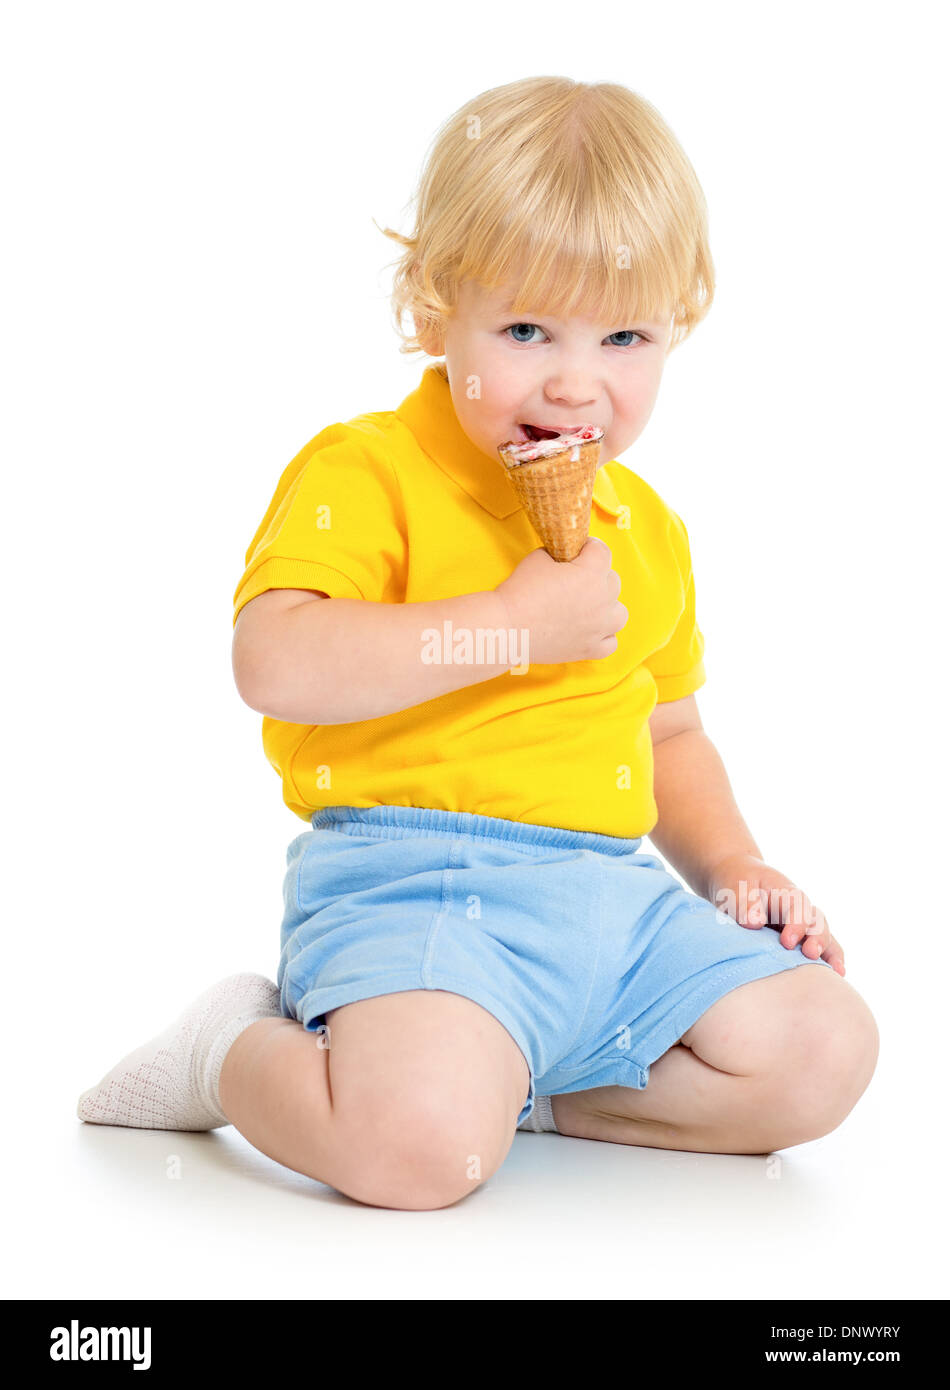 Kid boy eating ice cream Stock Photo